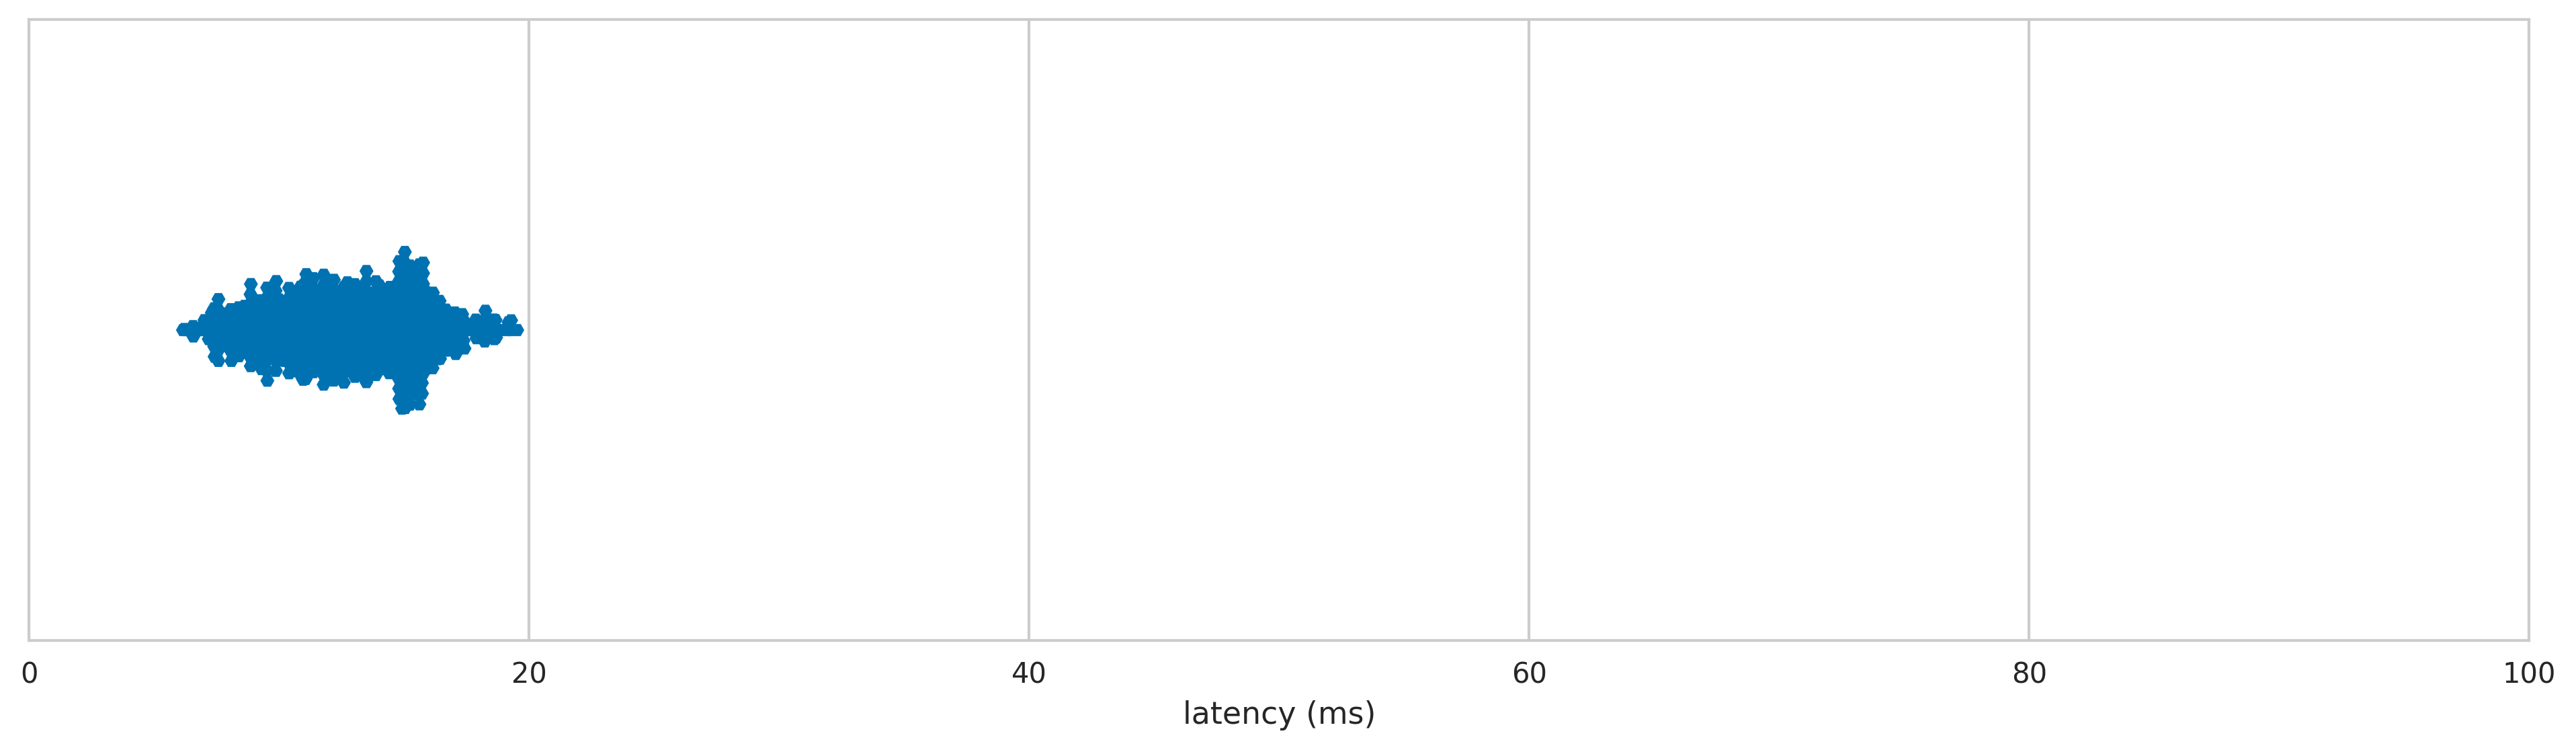 Logitech RX250 latency distribution 